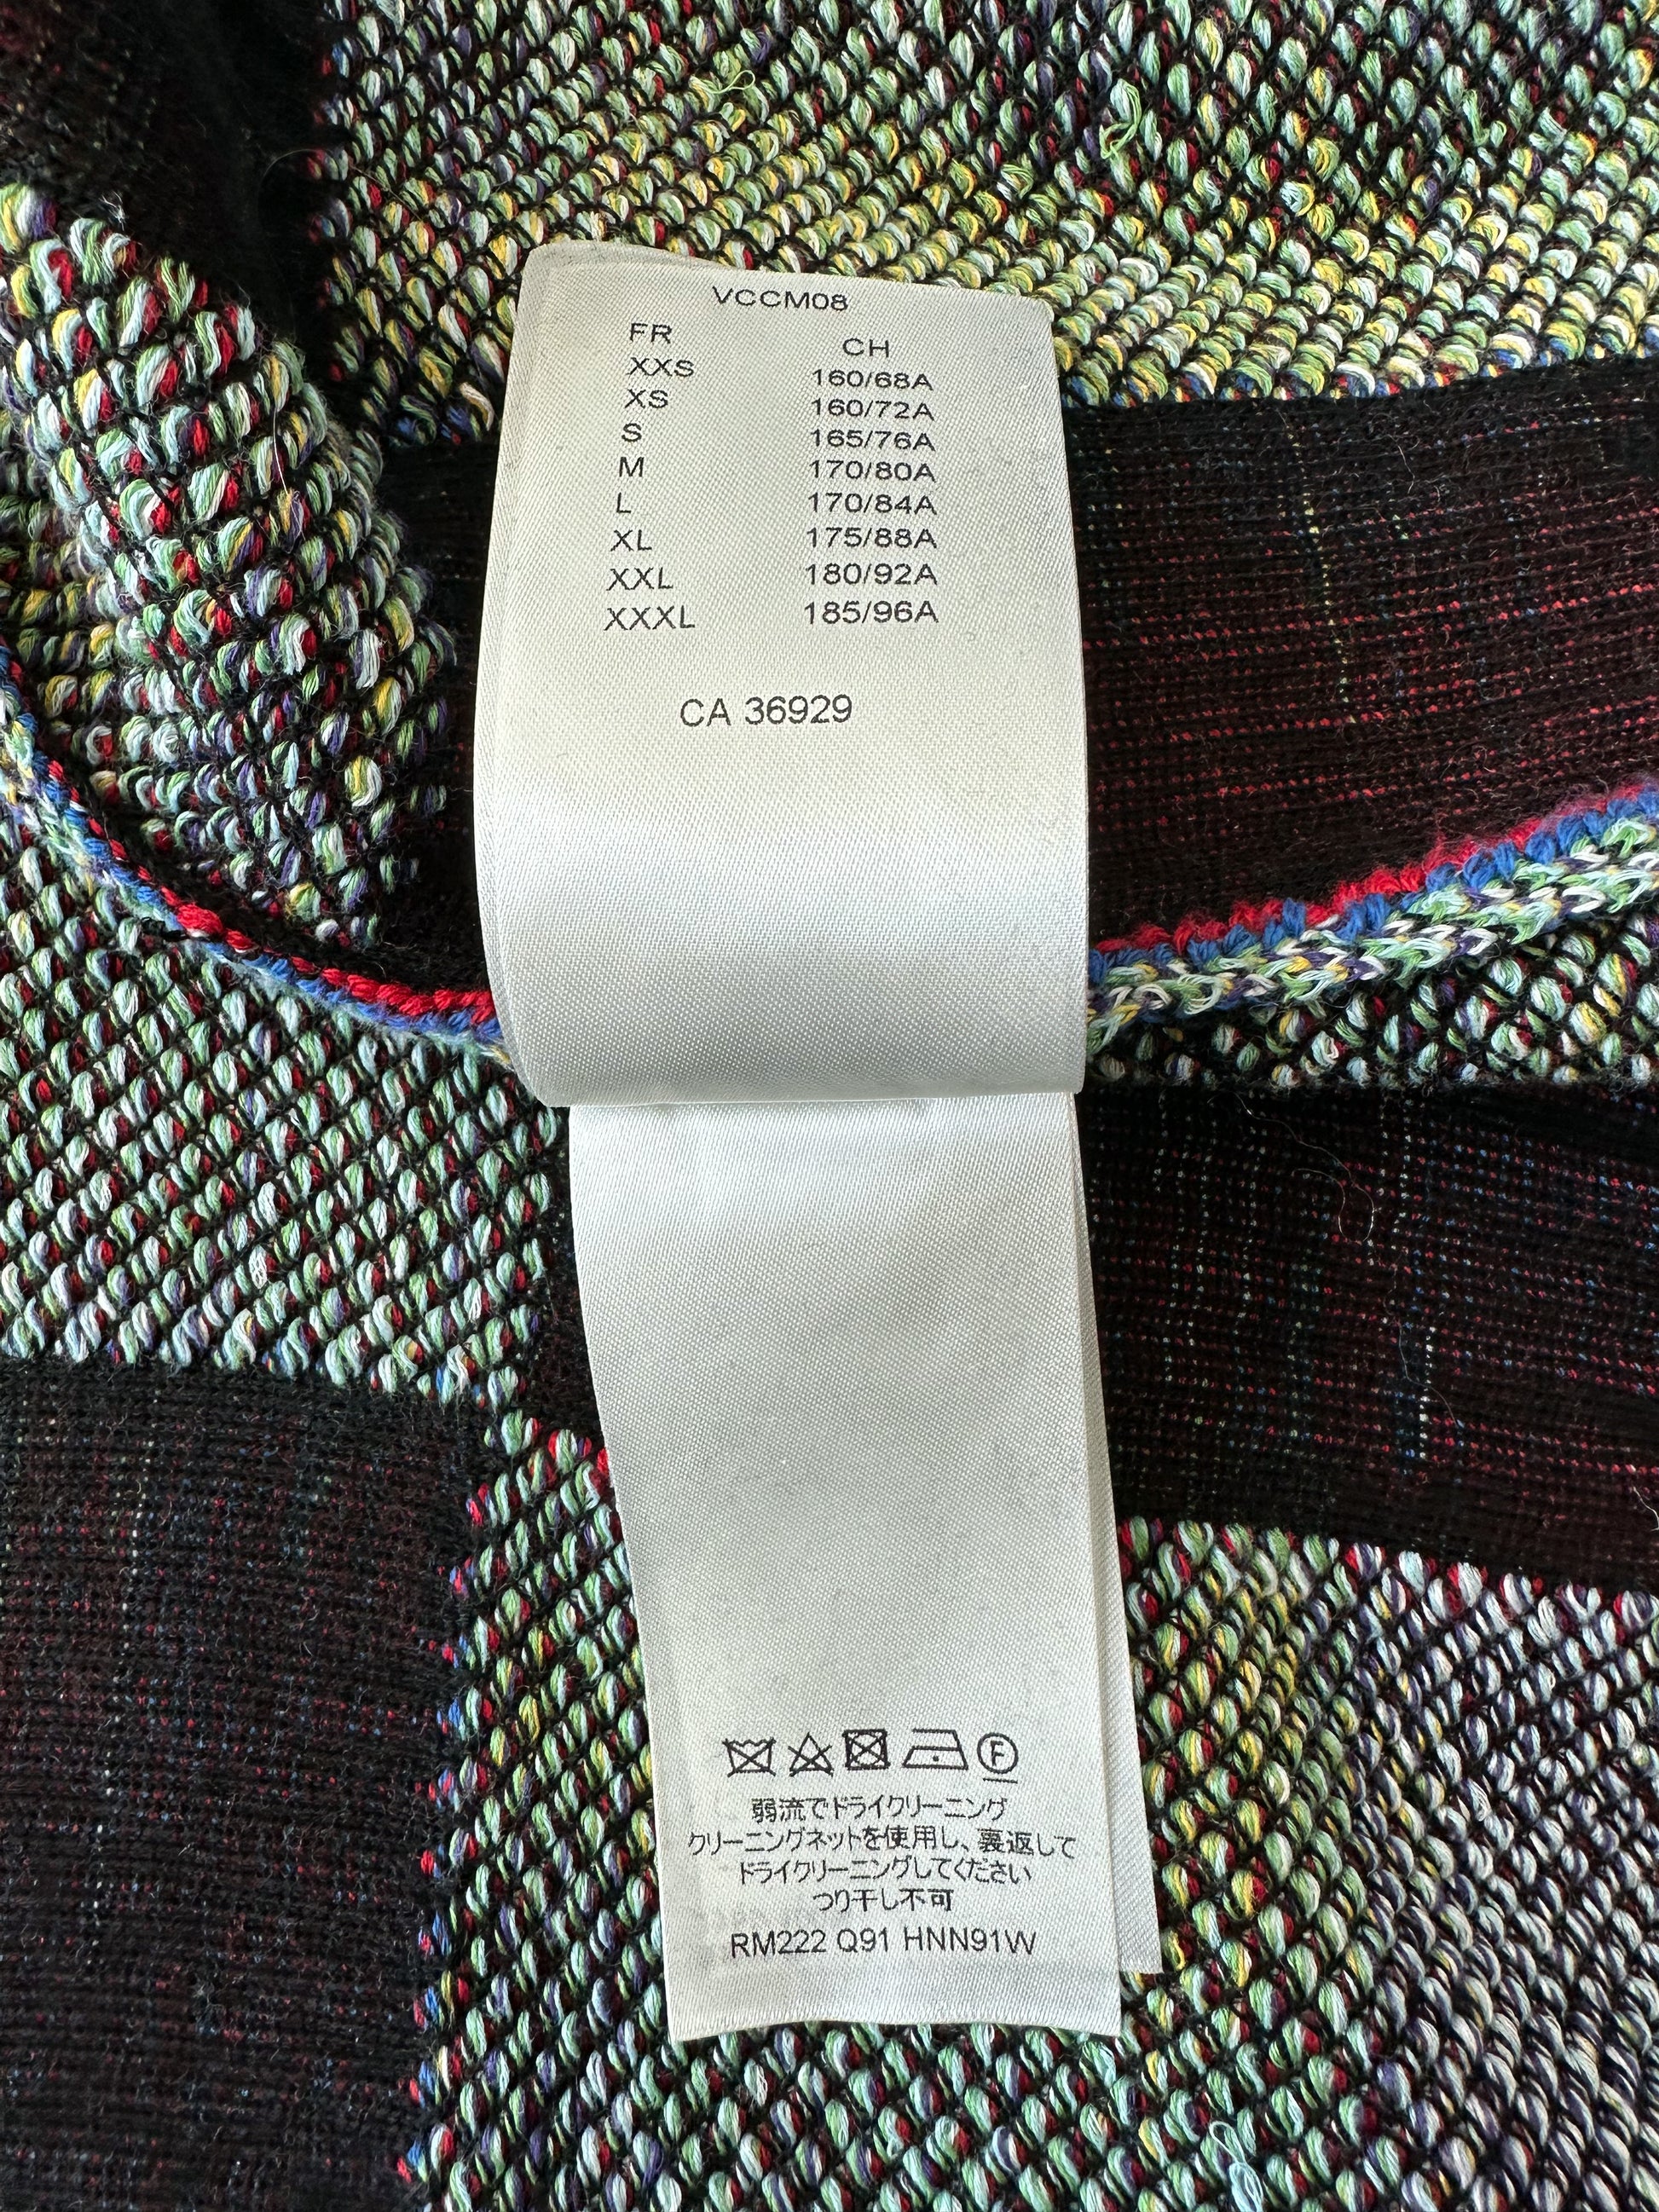 Louis Vuitton x Nigo Pattern Print Damier Fleece Bomber Jacket